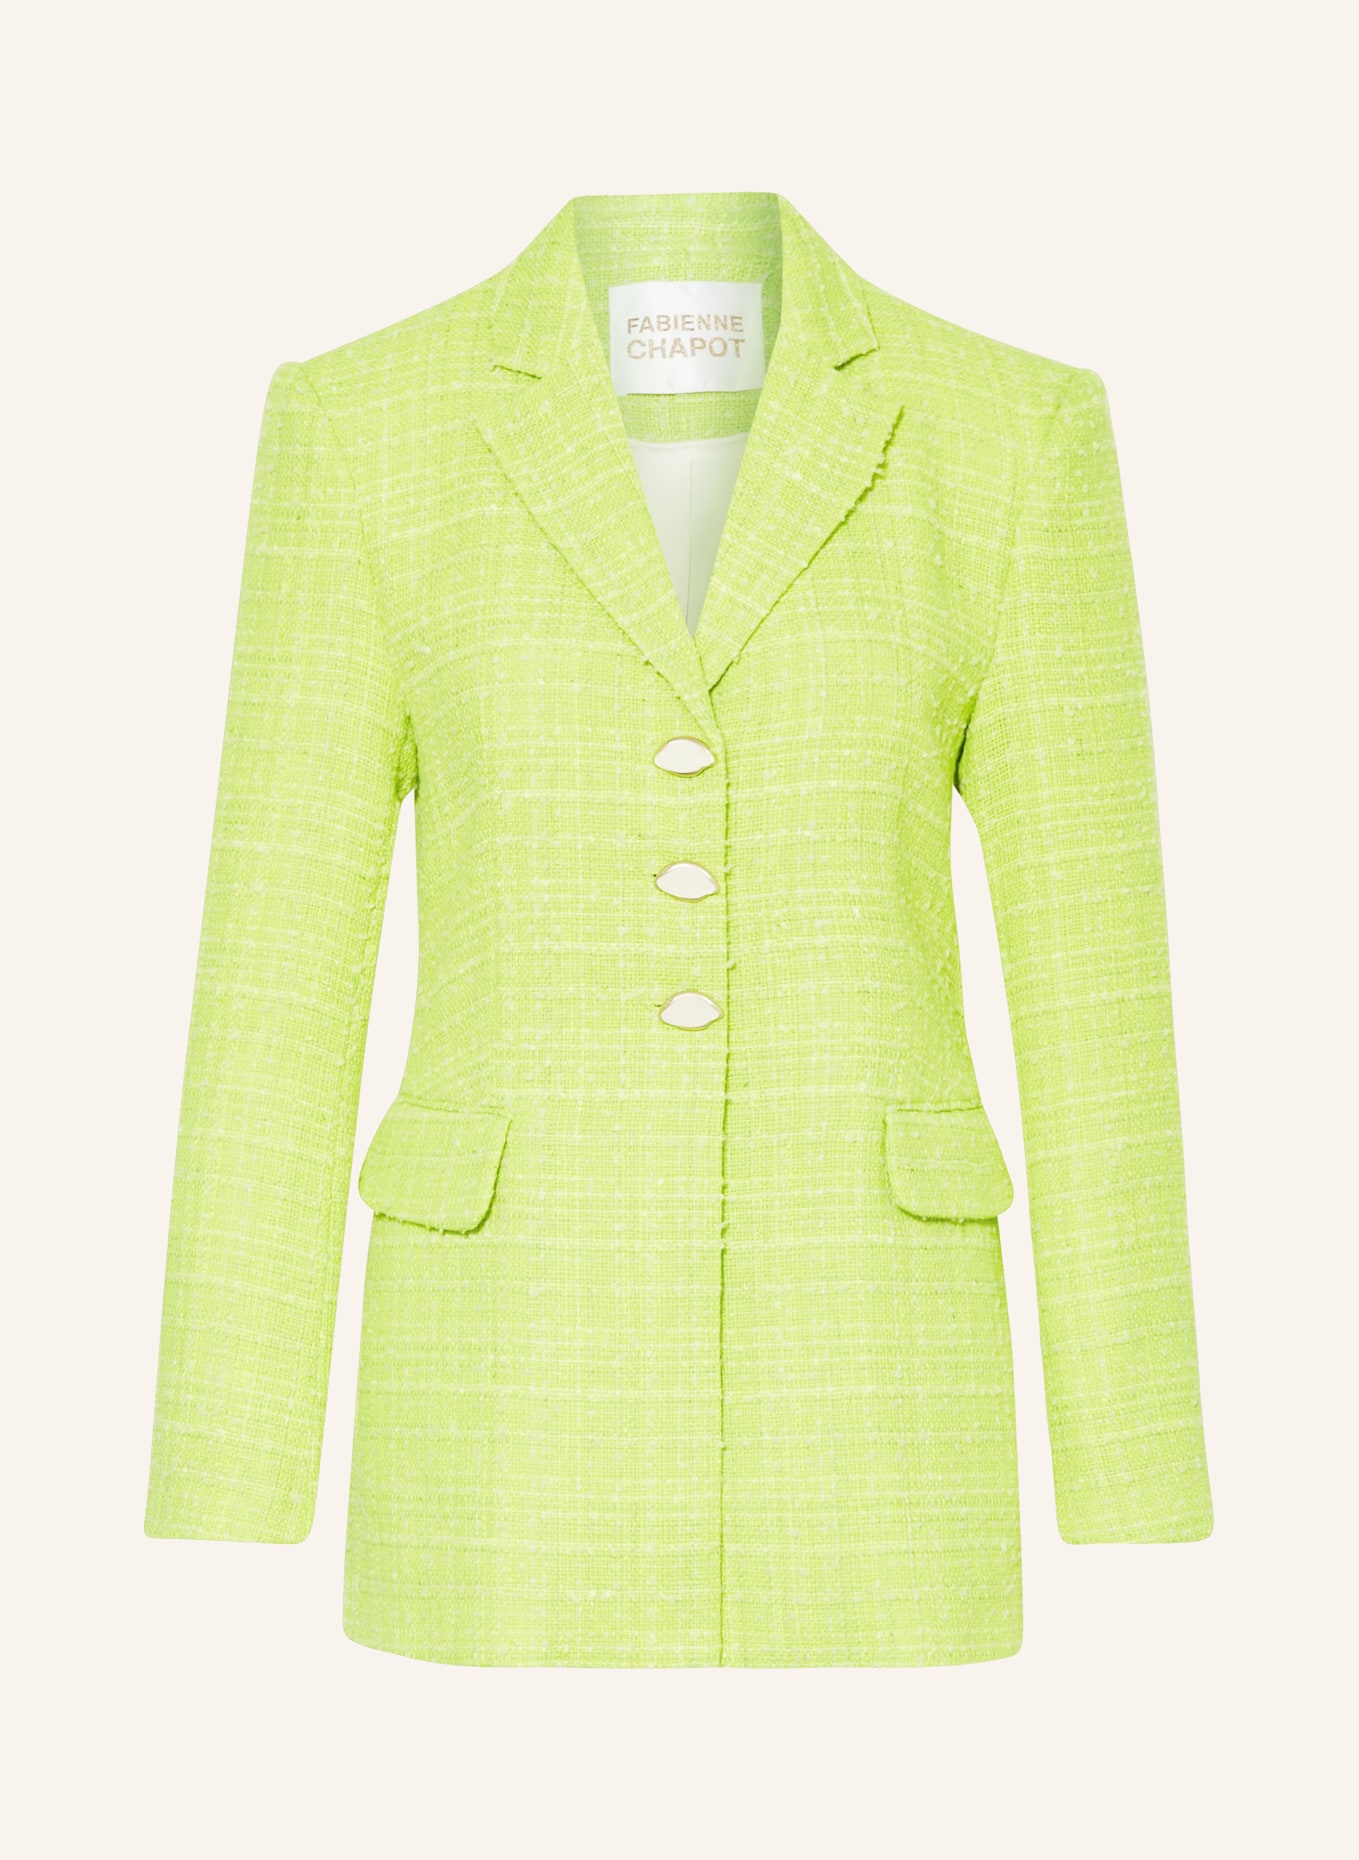 FABIENNE CHAPOT Tweed-Blazer CHER, Farbe: 4011 Lovely Lime (Bild 1)